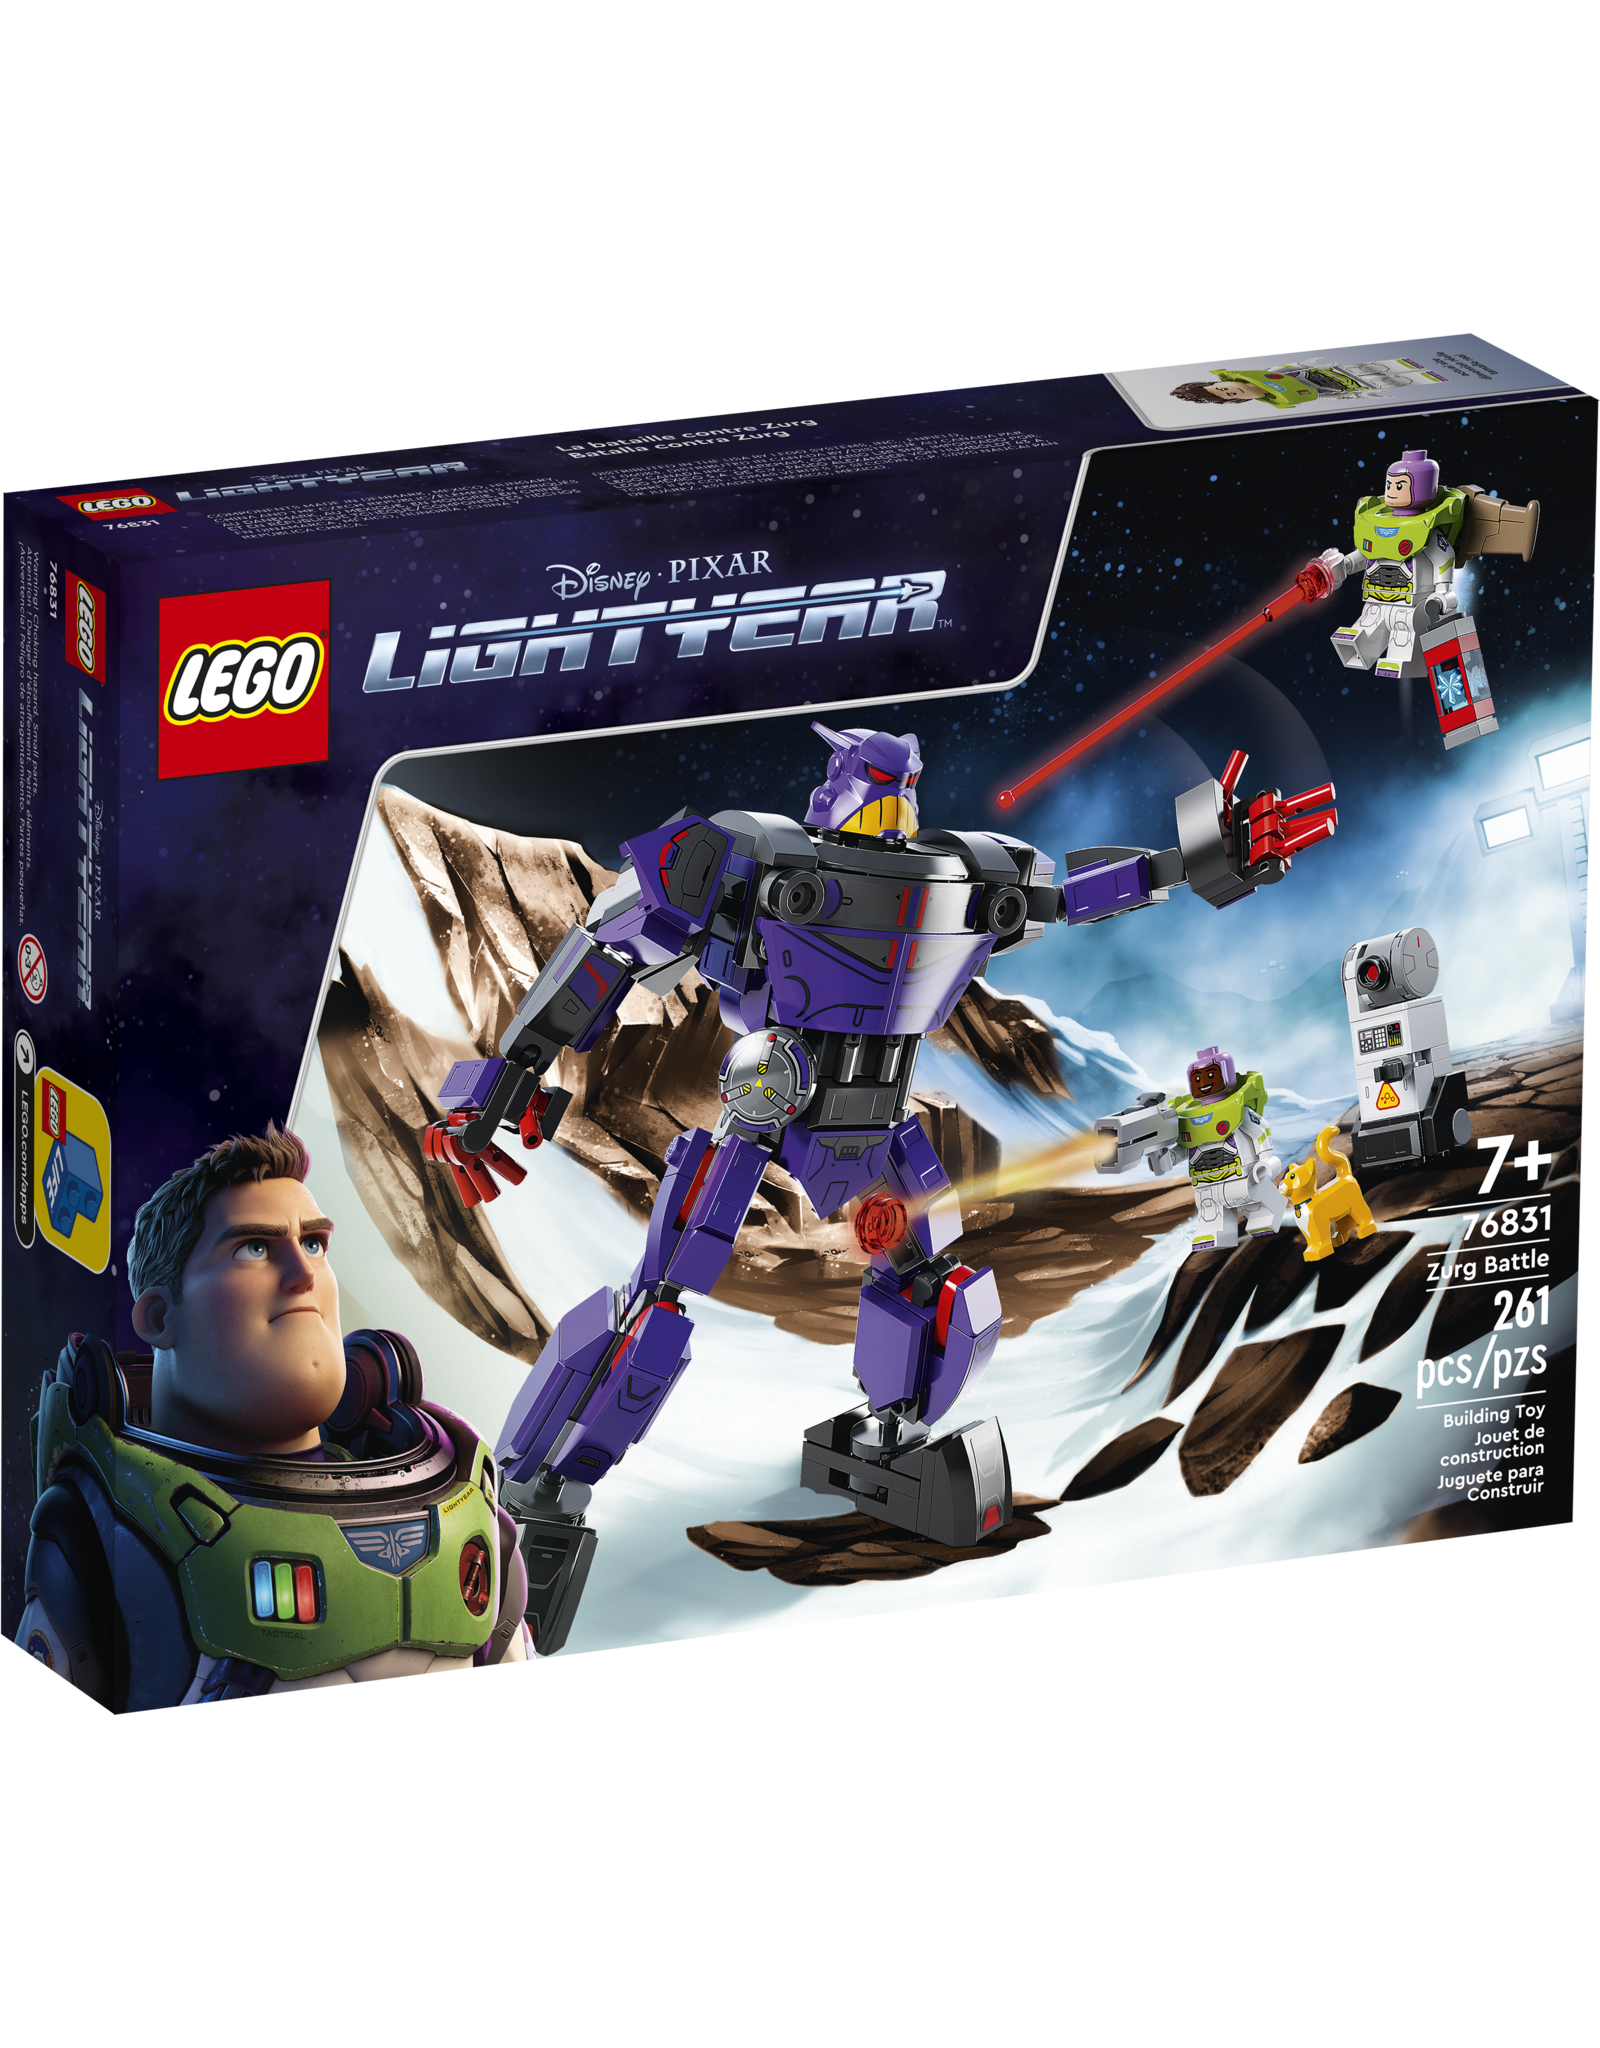 LEGO The Zurg Battle Lightyear 76831